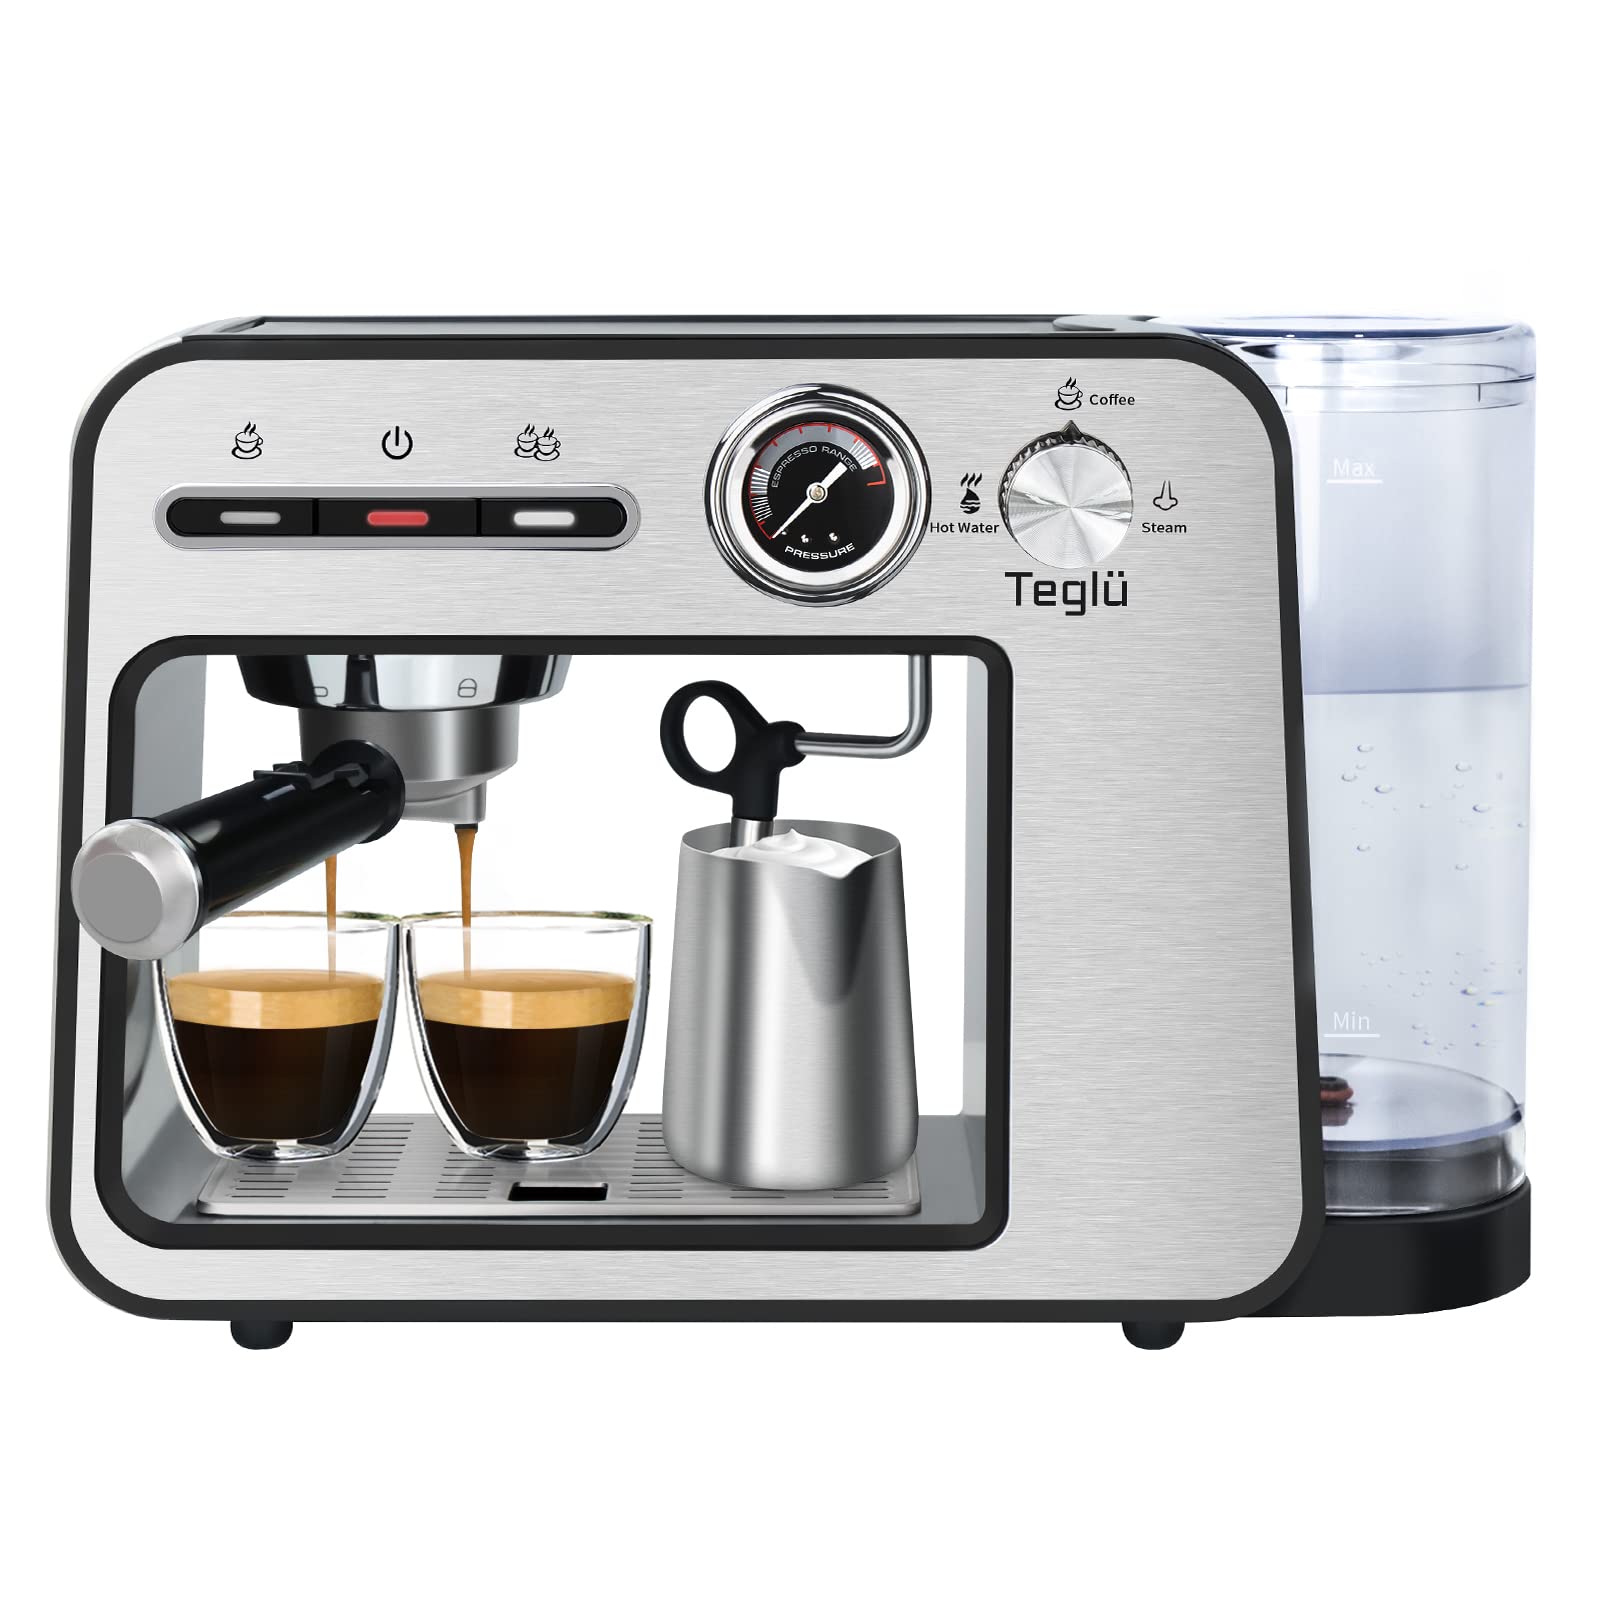 Teglu Espresso Machine 20 Bar with Milk Frother